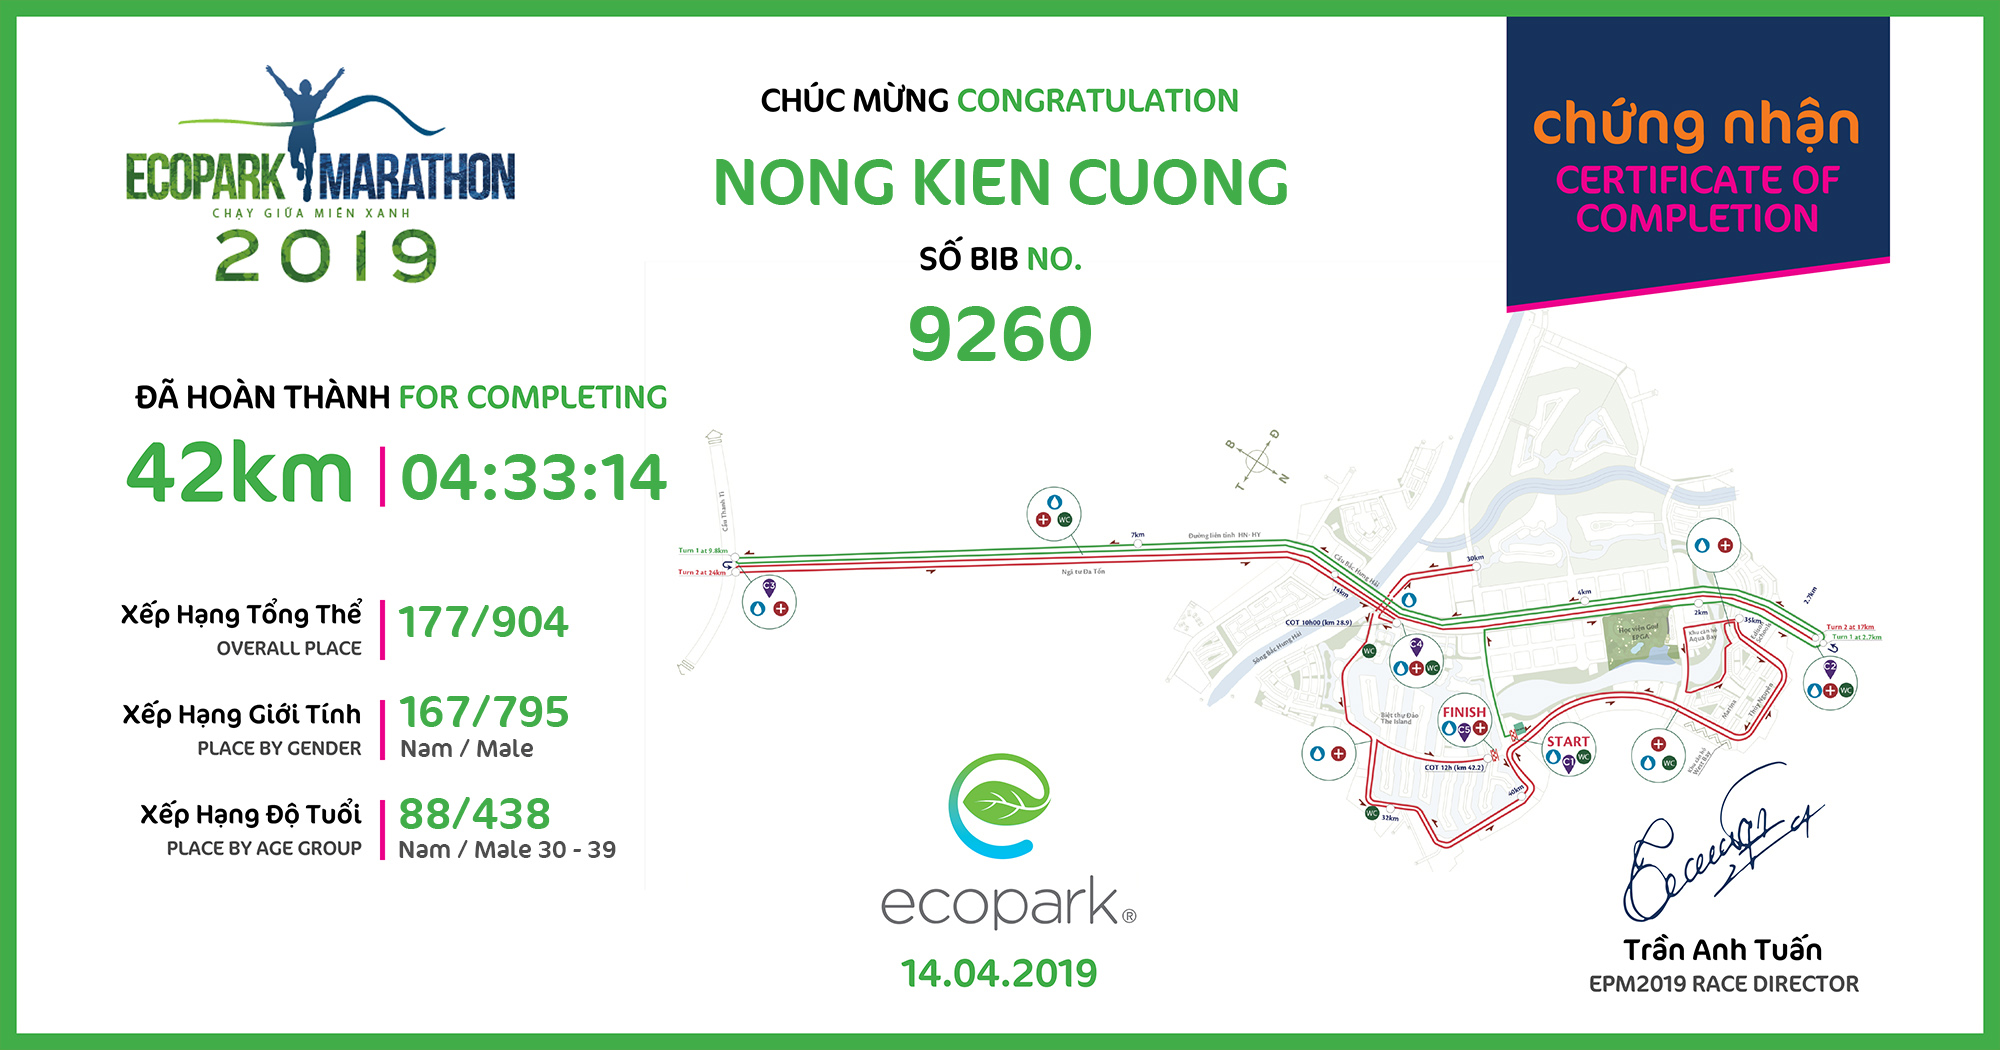 9260 - Nong Kien Cuong